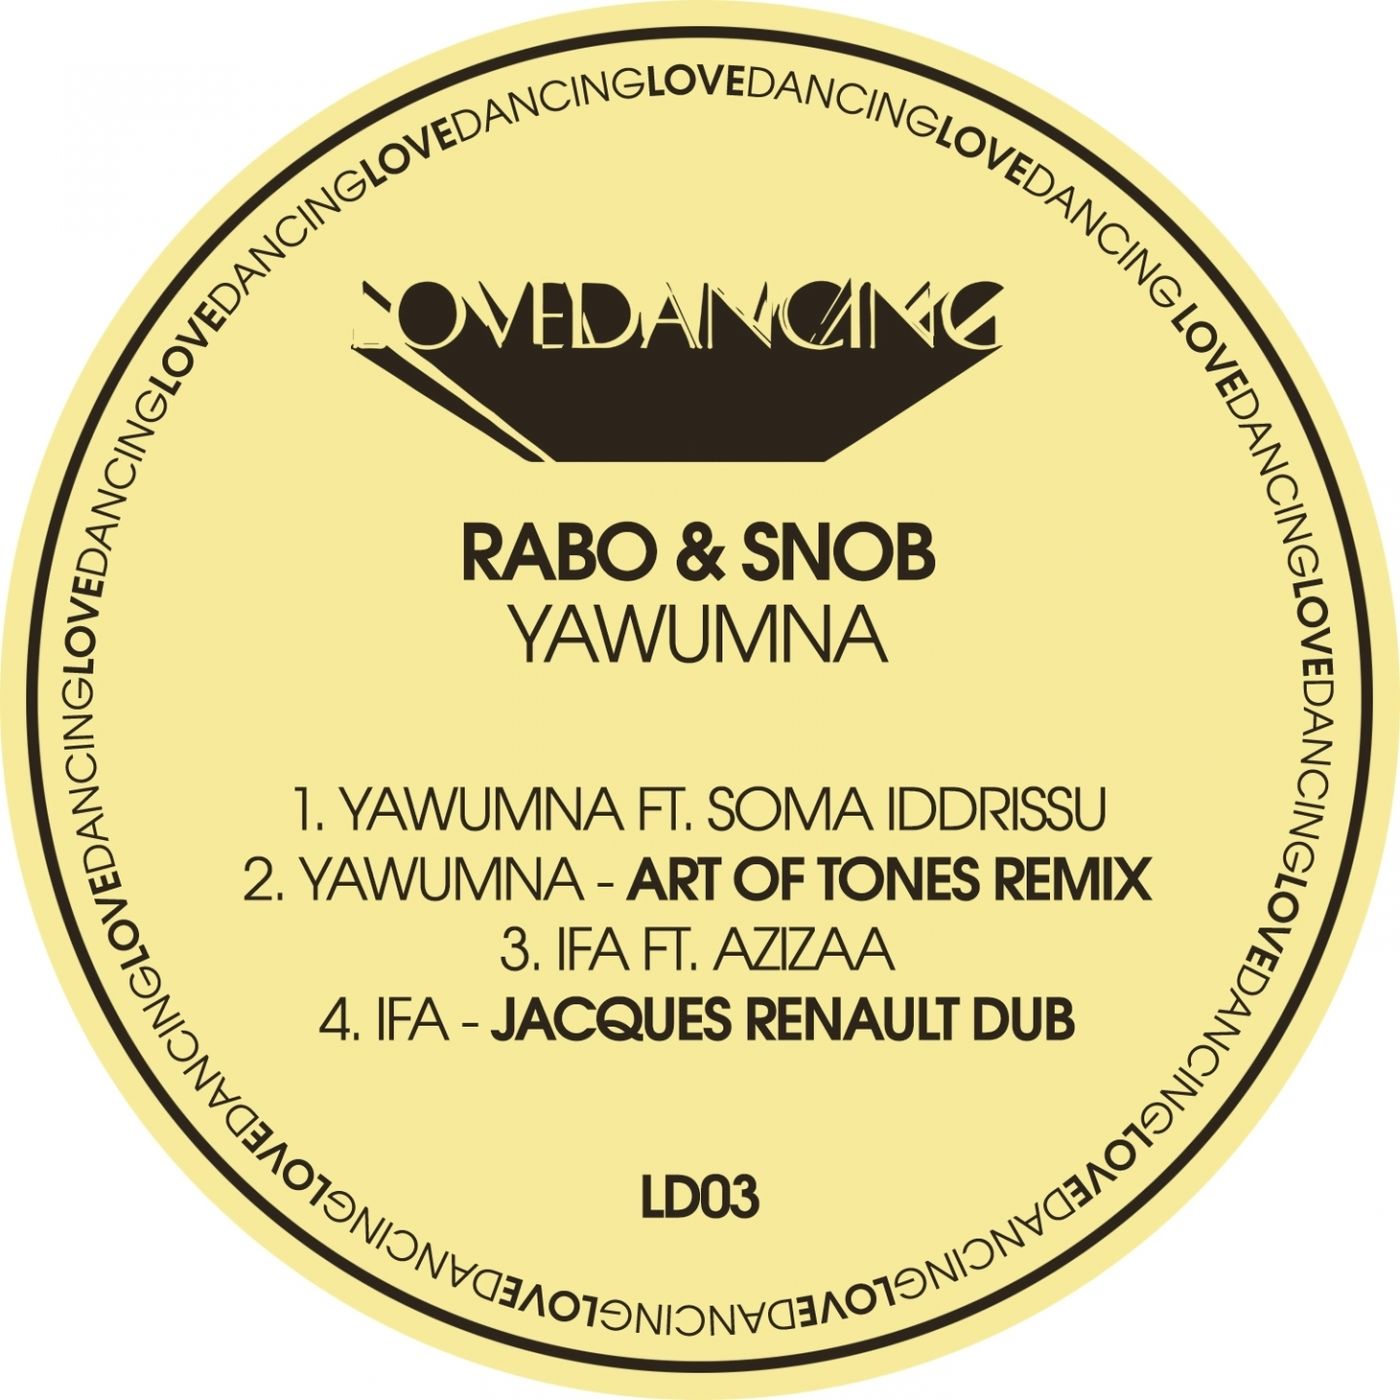 RaBo & SnoB - Yawumna / Lovedancing